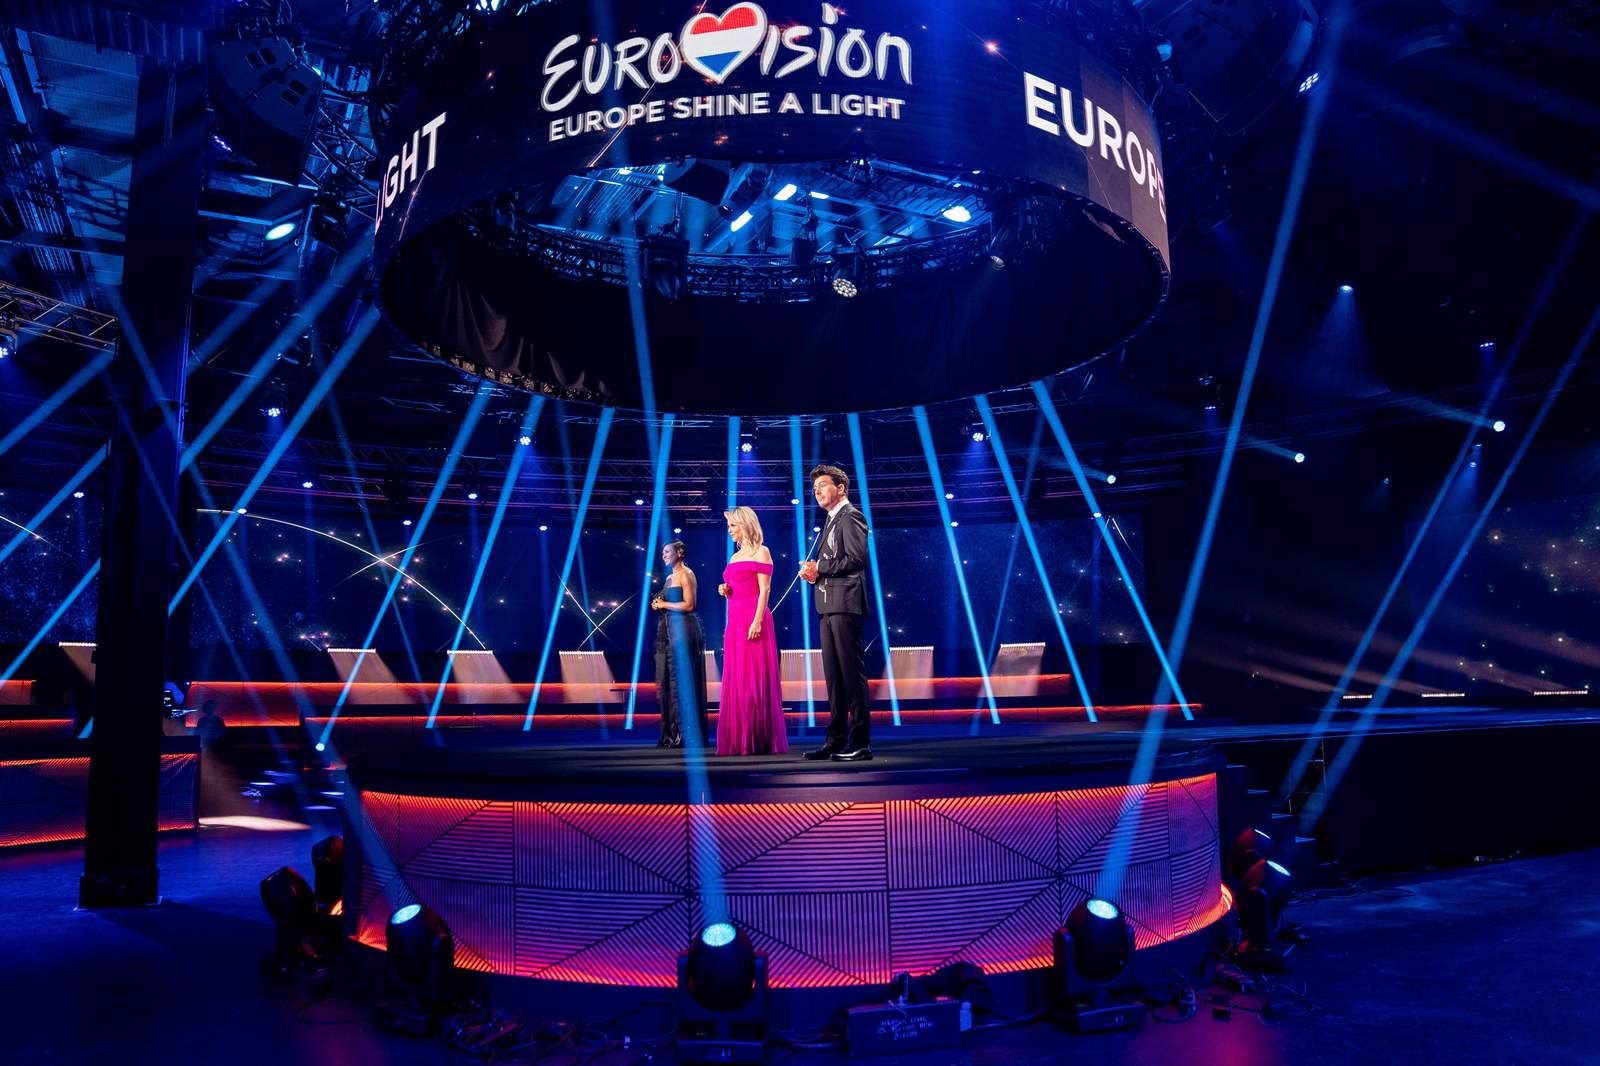 No contest: In corona era, Eurovision seeks to unite Europe